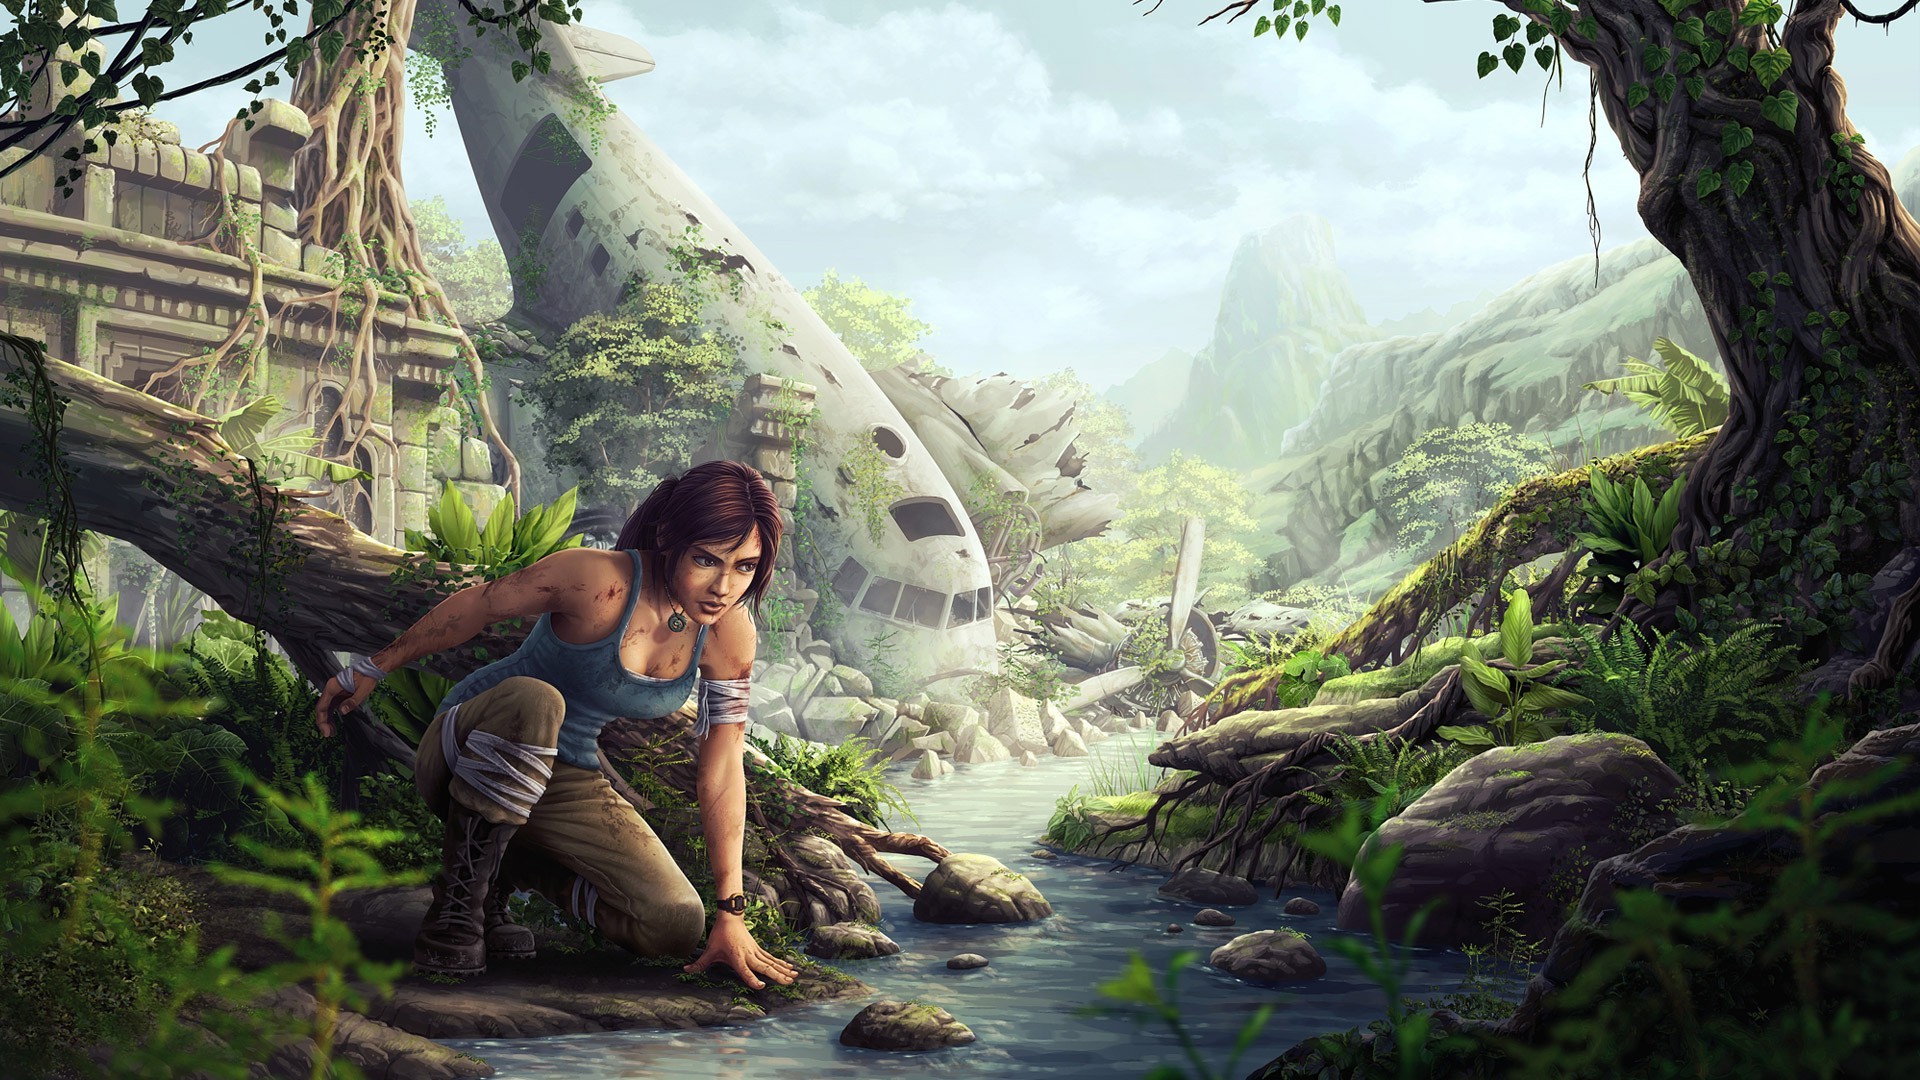 video Games, Video Game Characters, Video Game Girls, Tomb Raider, Lara Croft, Fan Art, Artwork Wallpaper